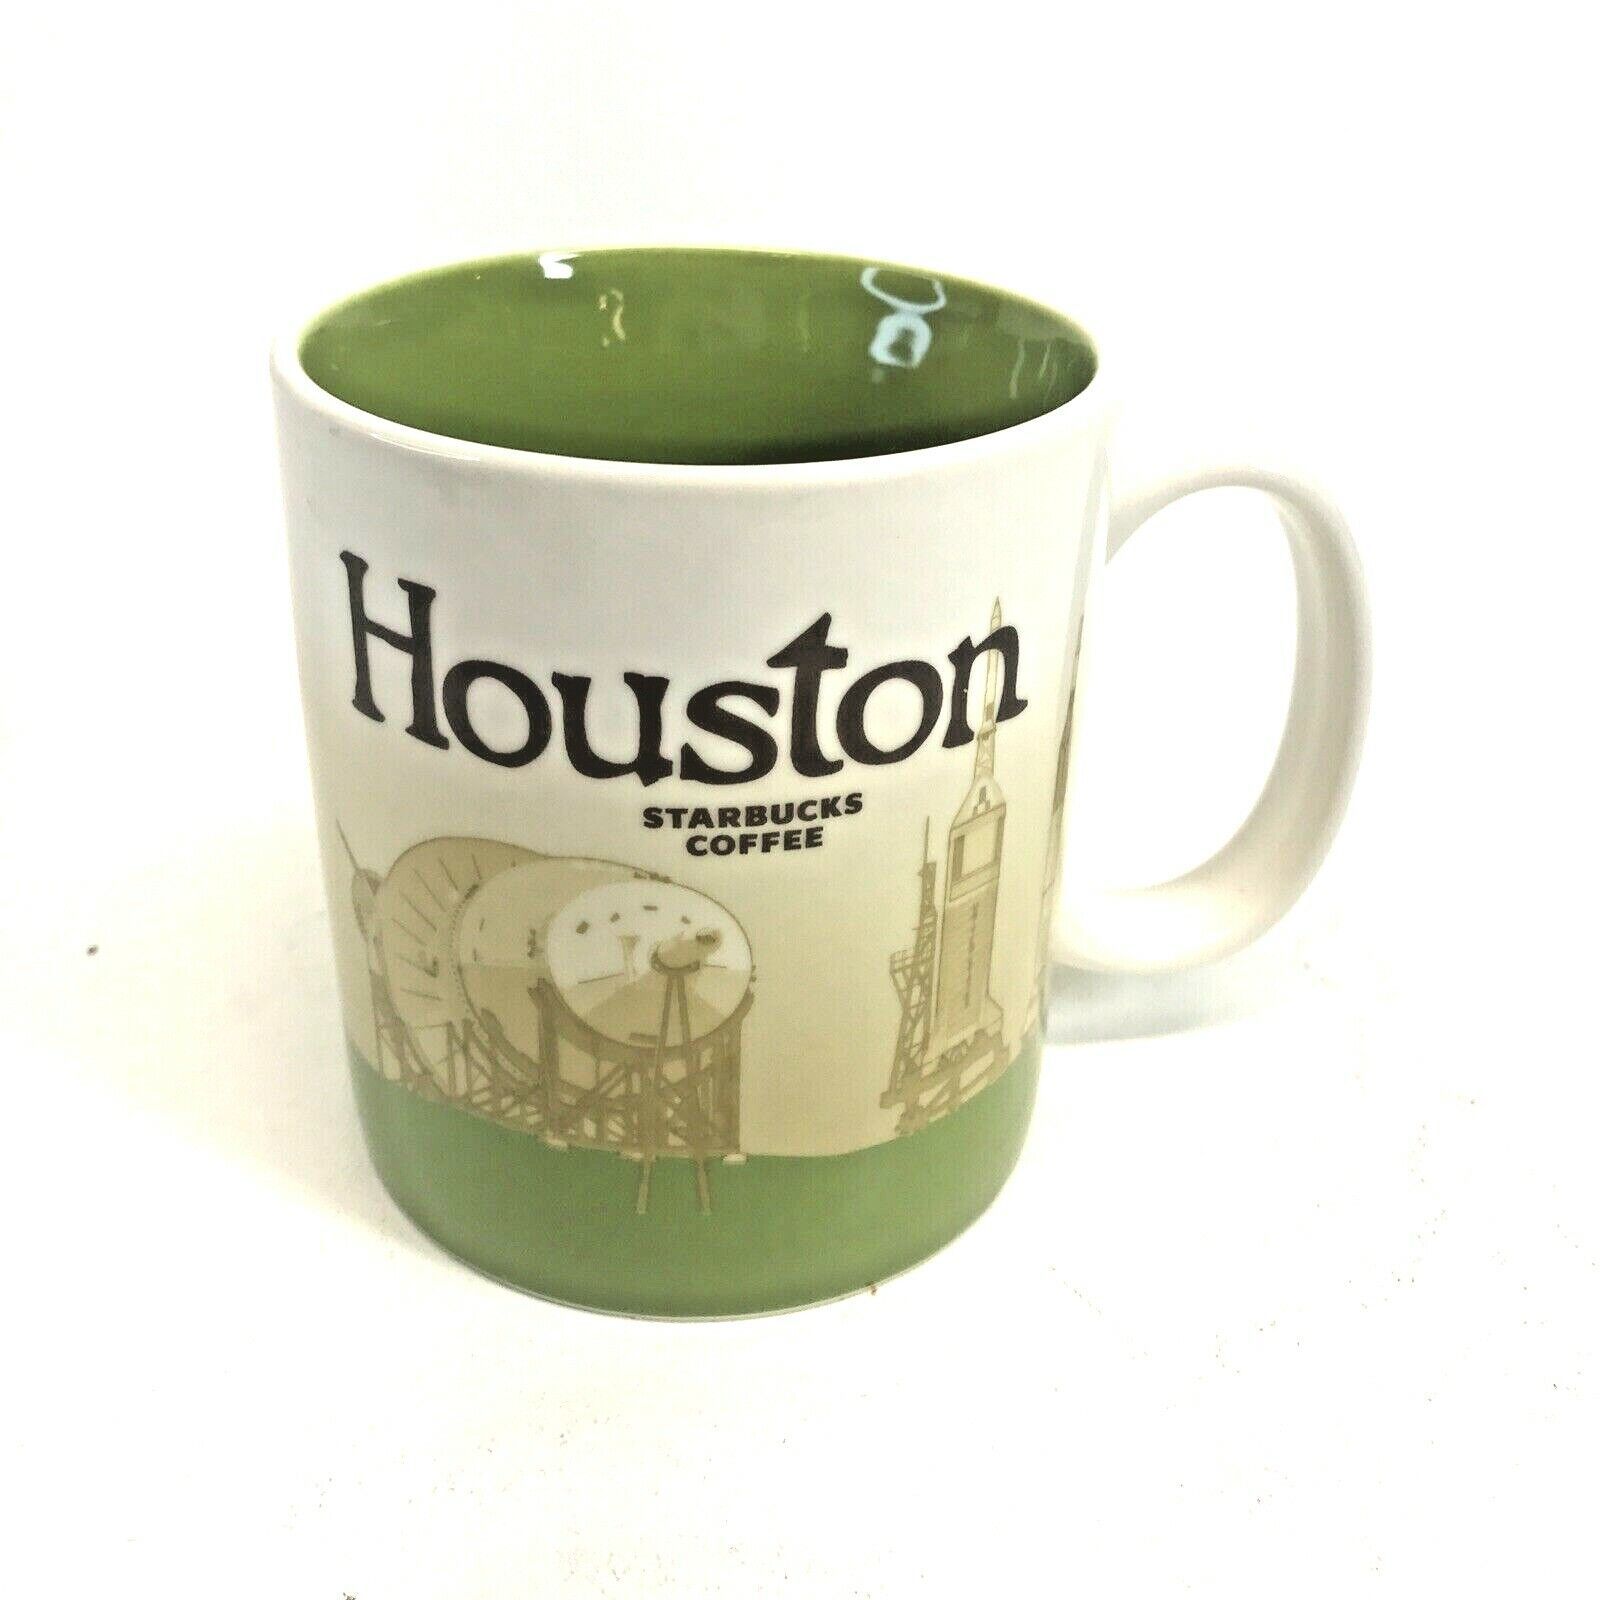 Primary image for Starbucks HOUSTON Coffee Tea Mug Cup Collector Series 16 fl oz 2011 